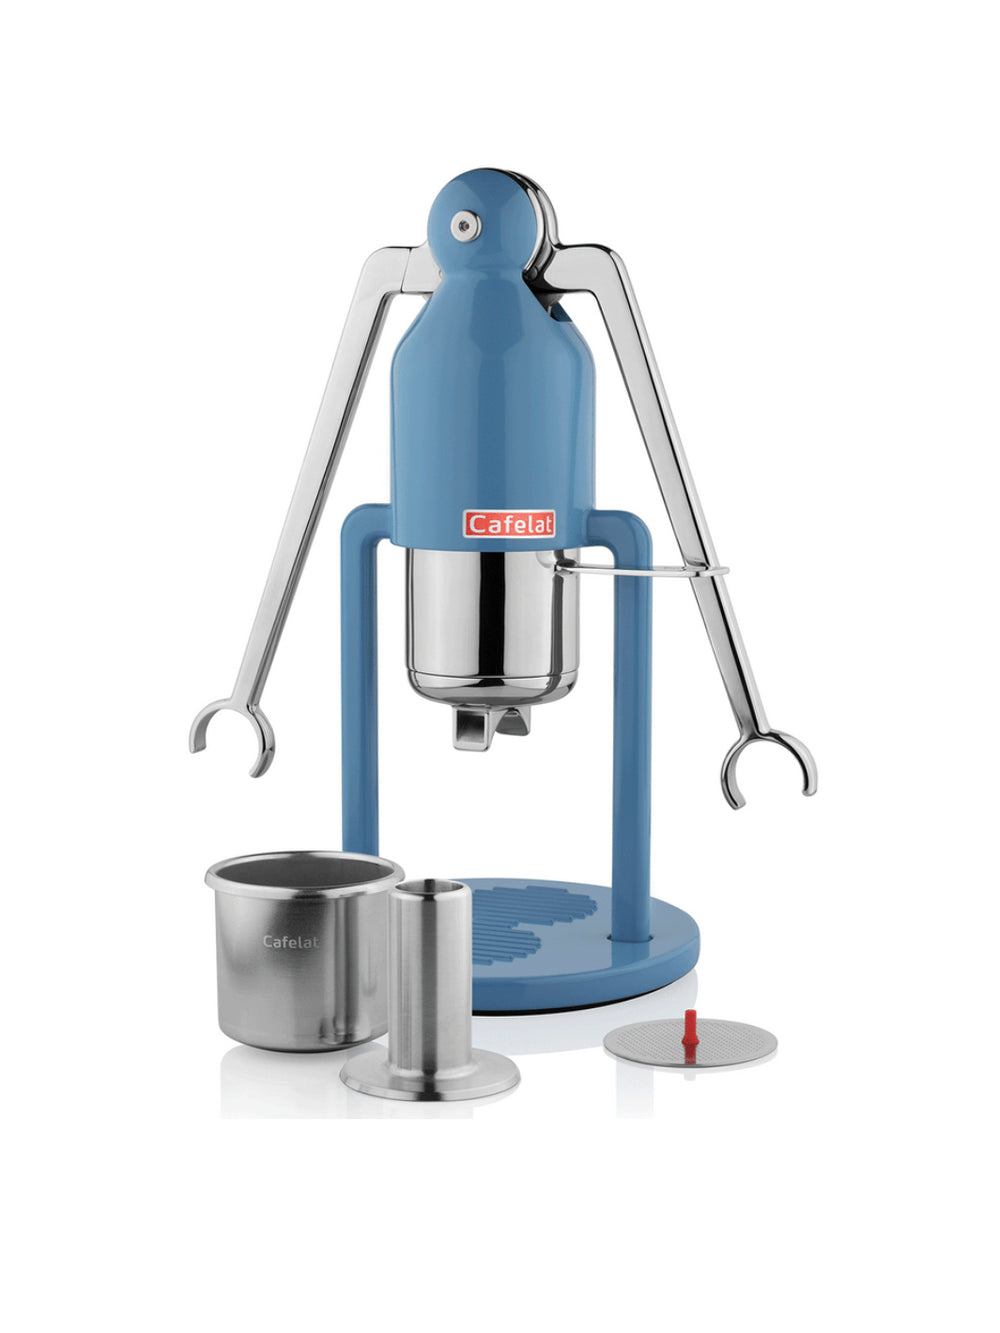 CAFELAT Robot Espresso Maker